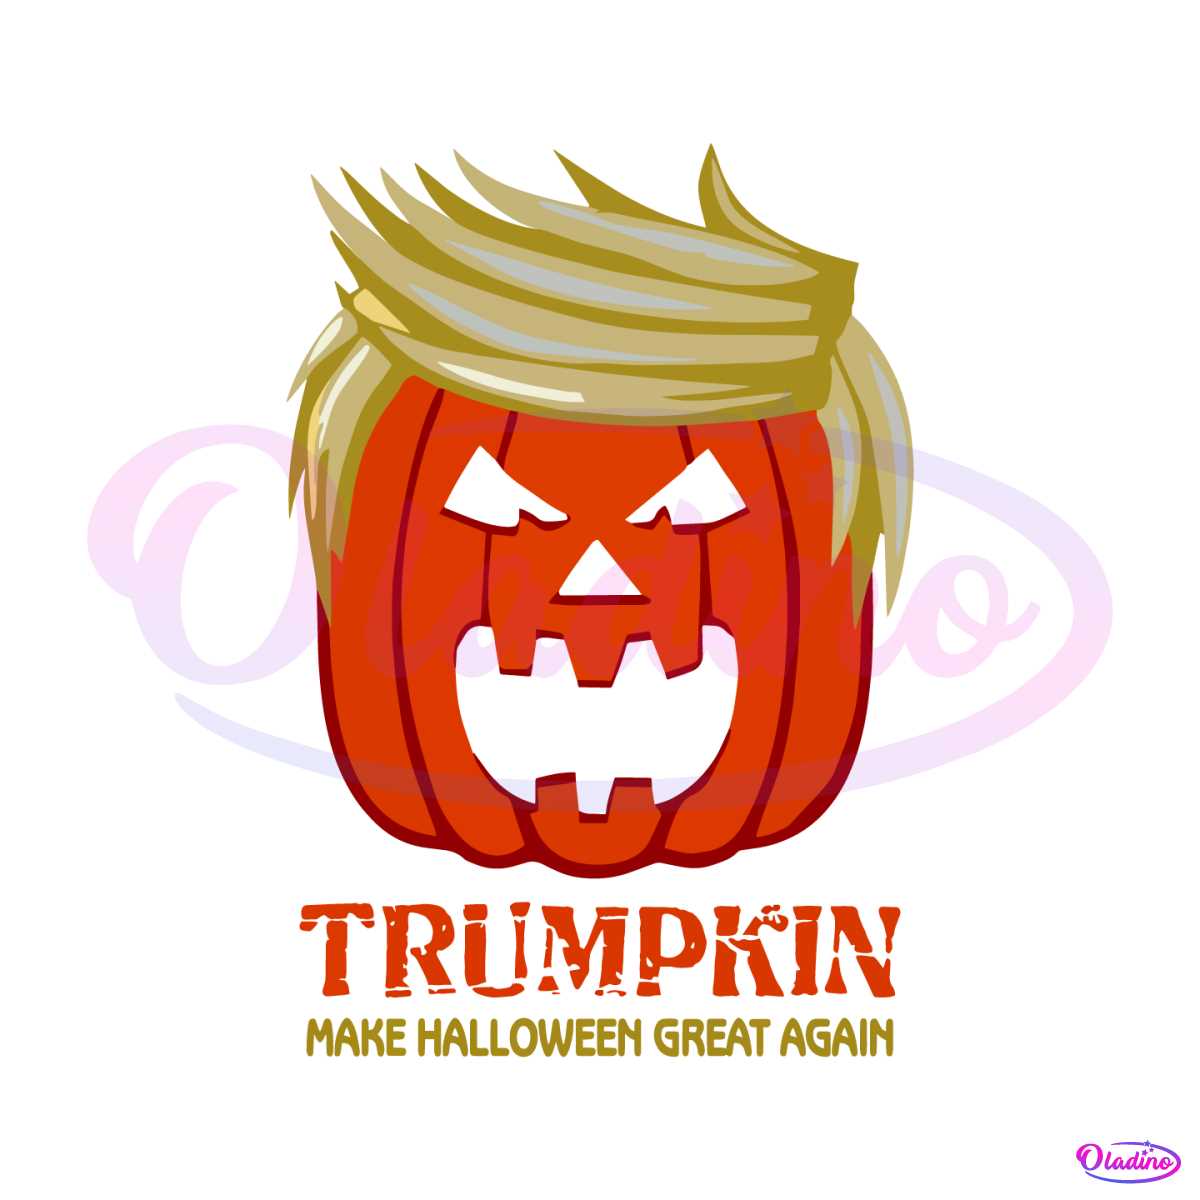 trumpkin-make-halloween-great-again-svg-design-file